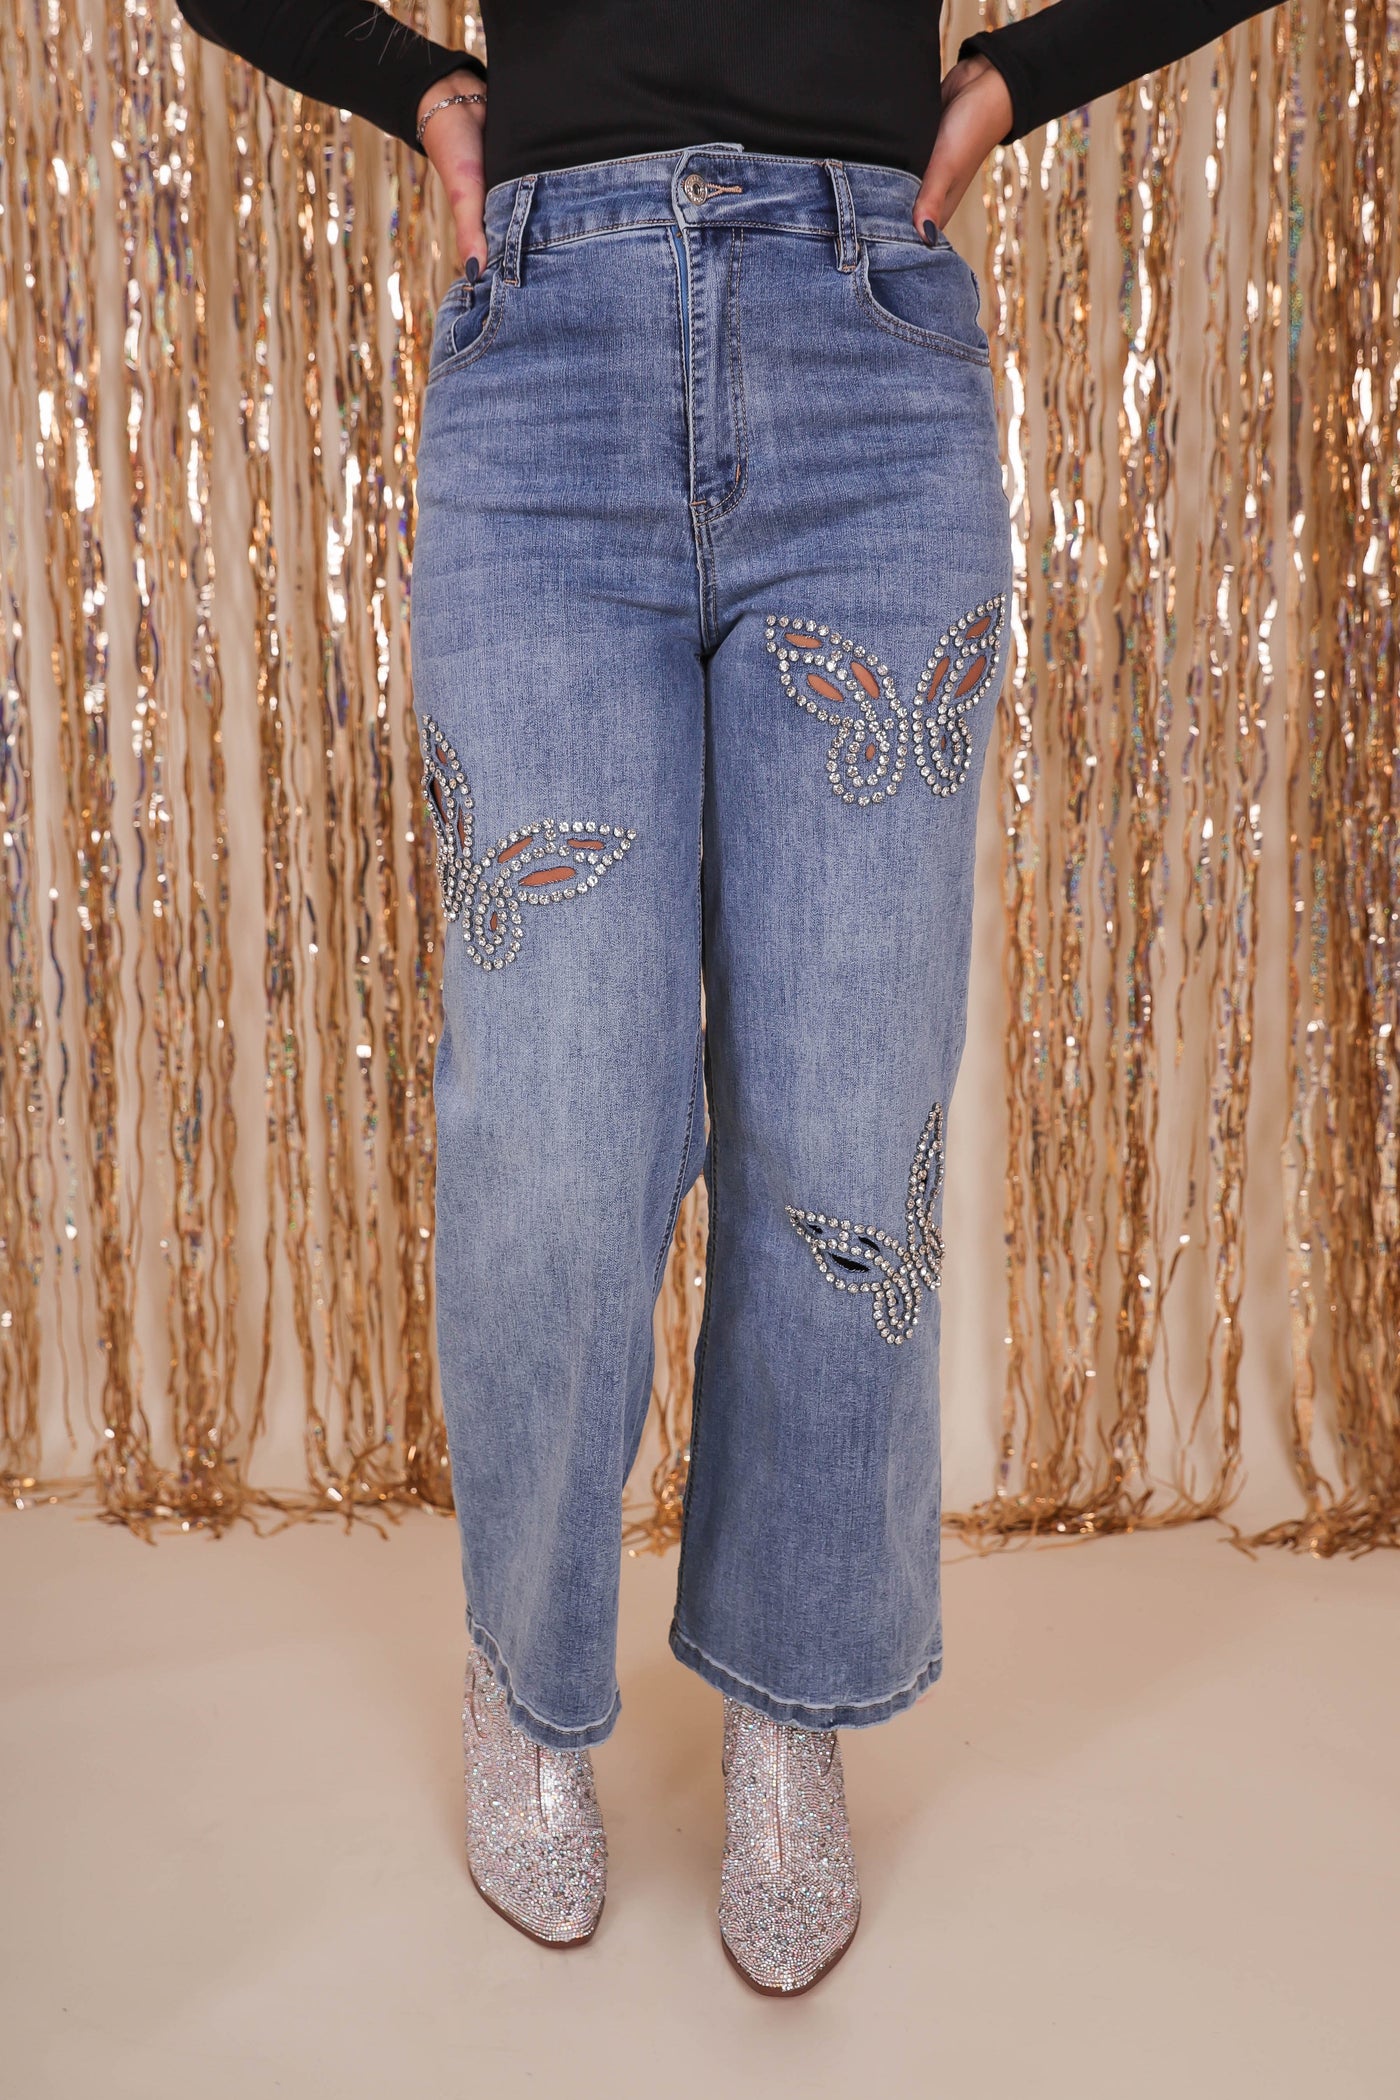 Women's Rhinestone Straight Leg Jeans- Women's Rhinestone Butterfly Denim- Taylor Butterfly Jeans